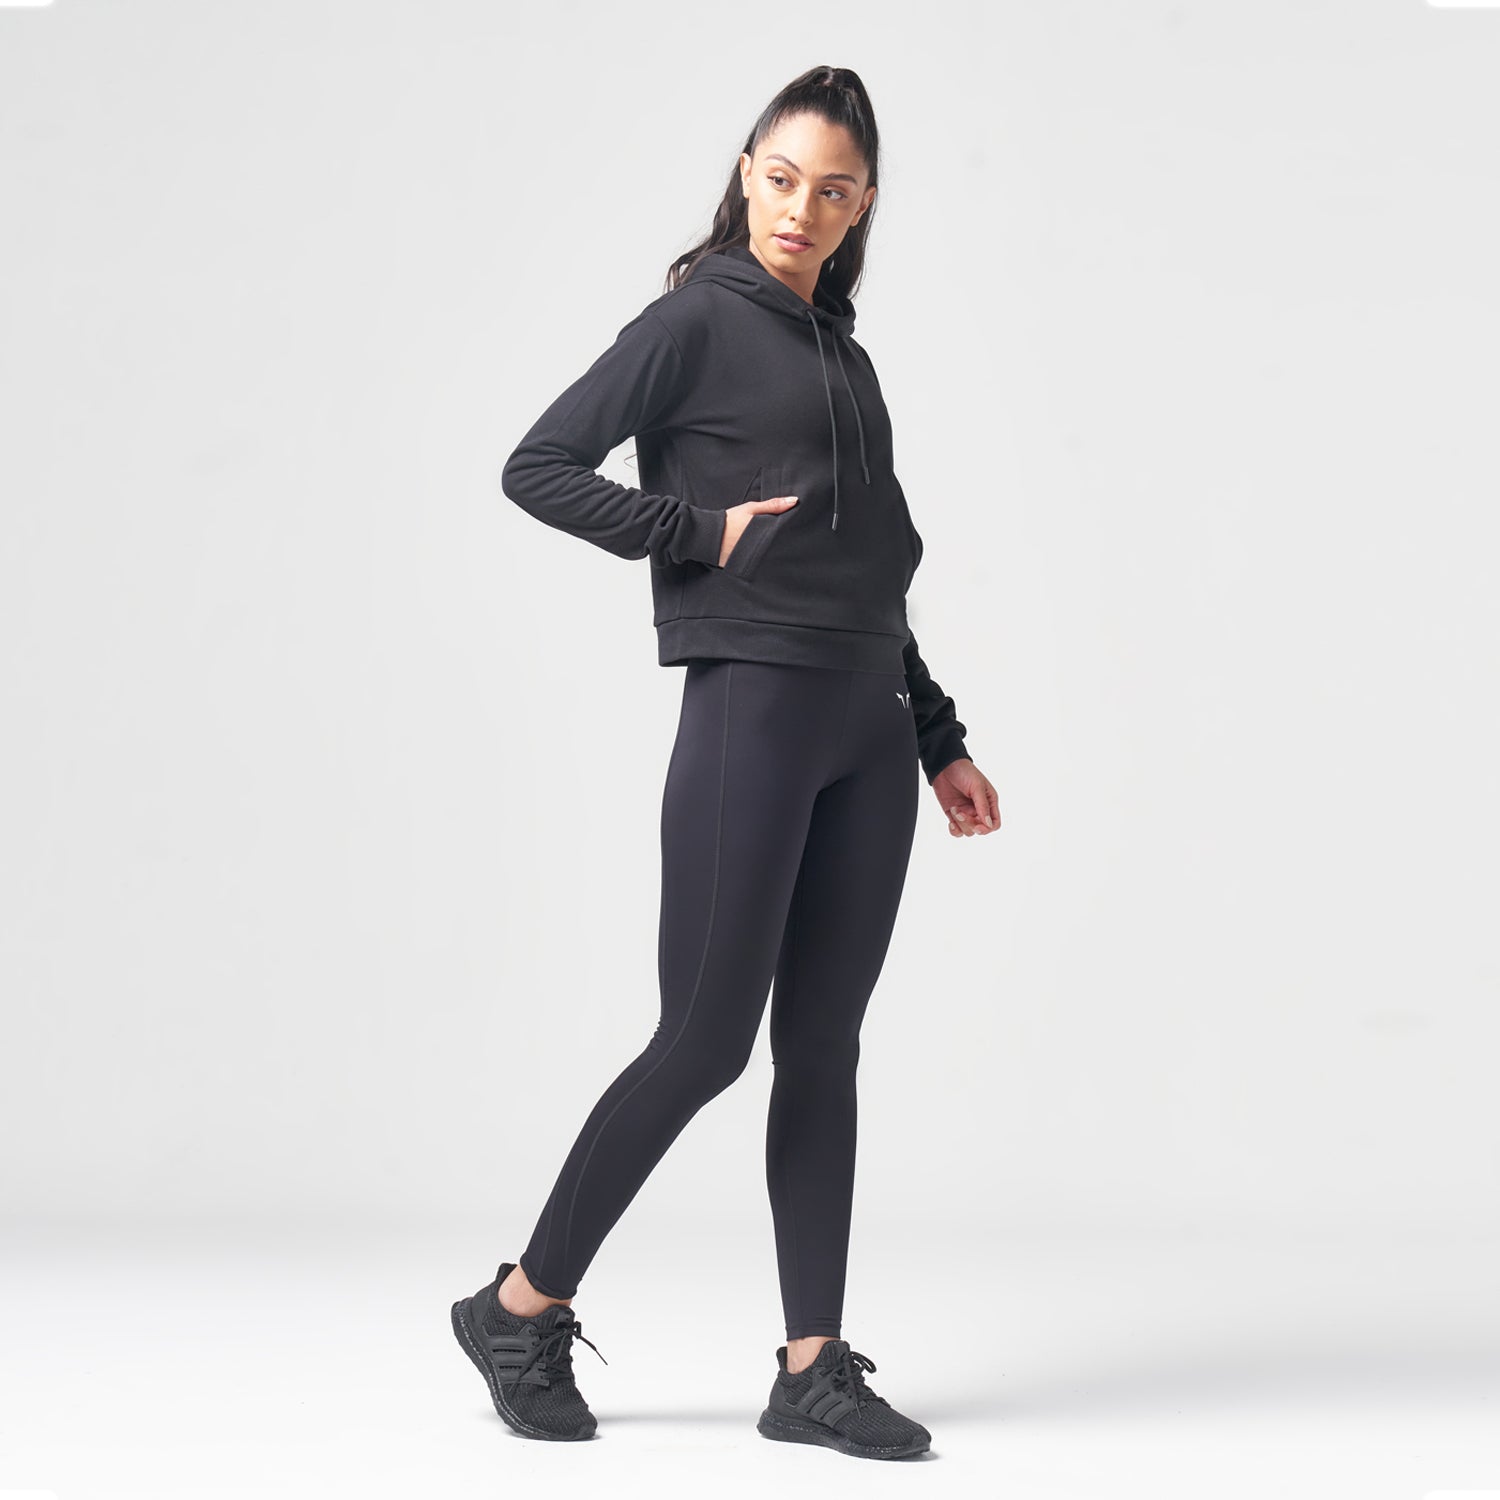 squatwolf-gym-wear-essential-warm-up-hoodie-black-workout-hoodie-for-women